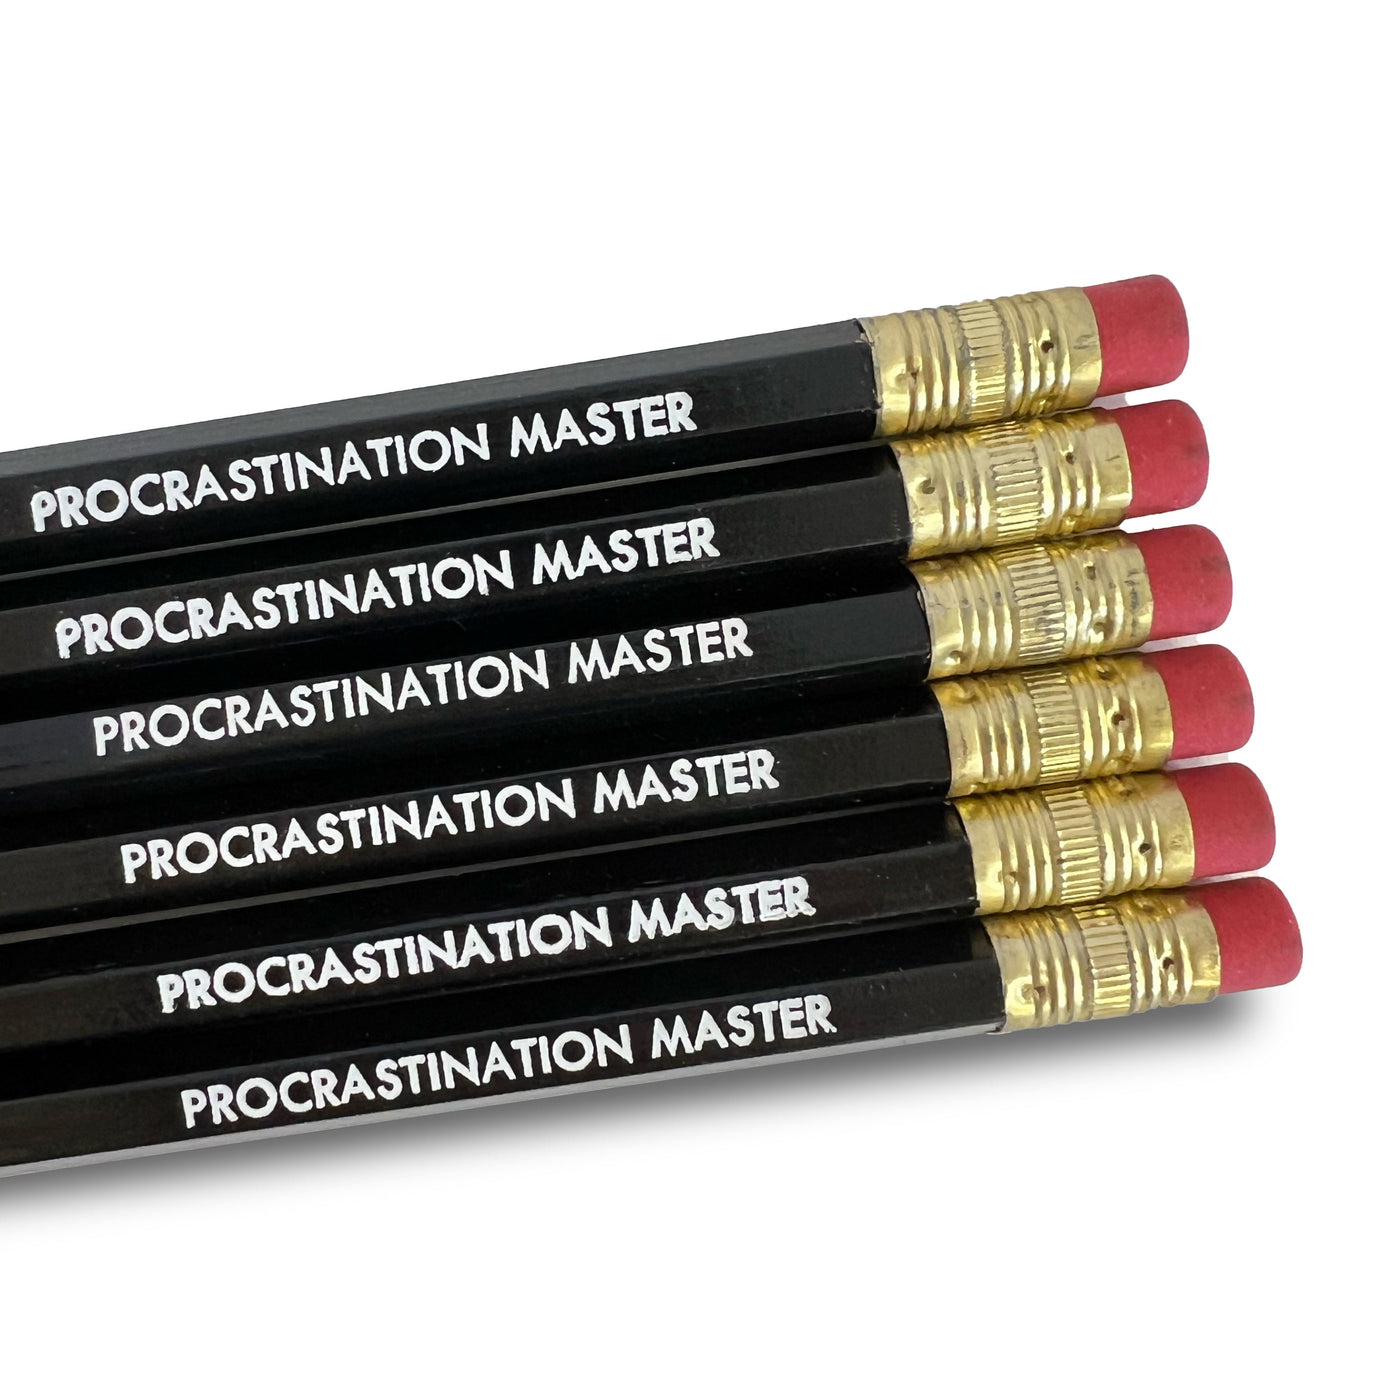 Procrastination Master Pencils